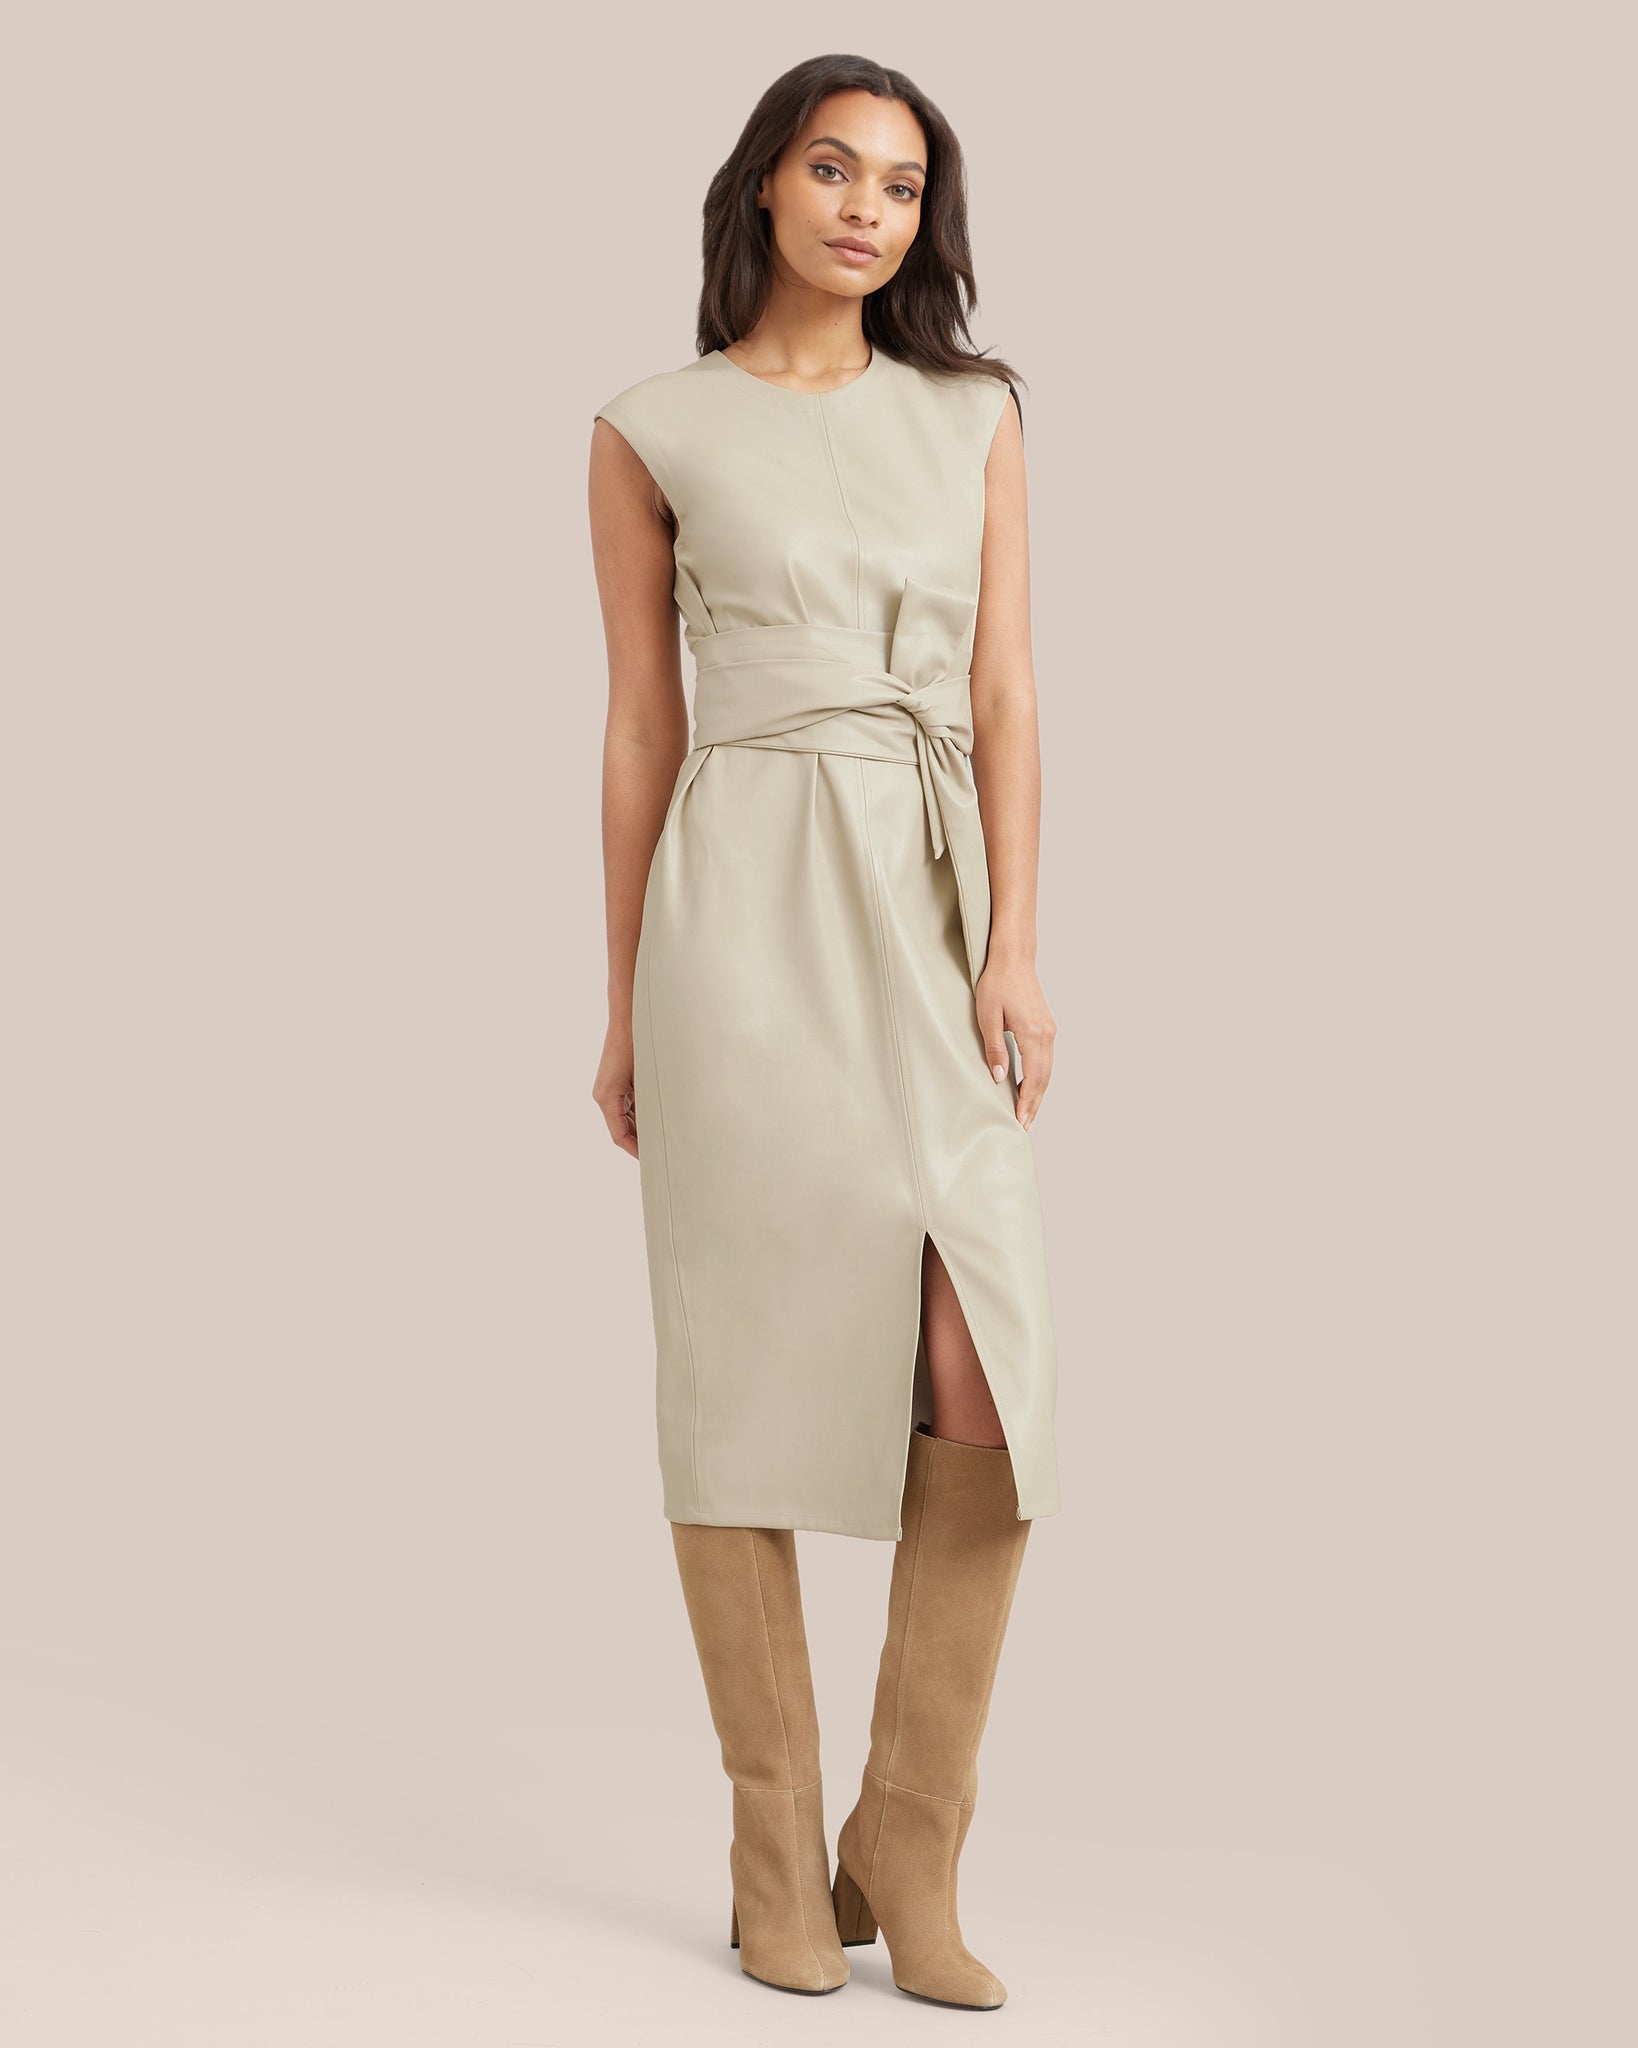 Pilar Vegan Leather Tie-Front Dress